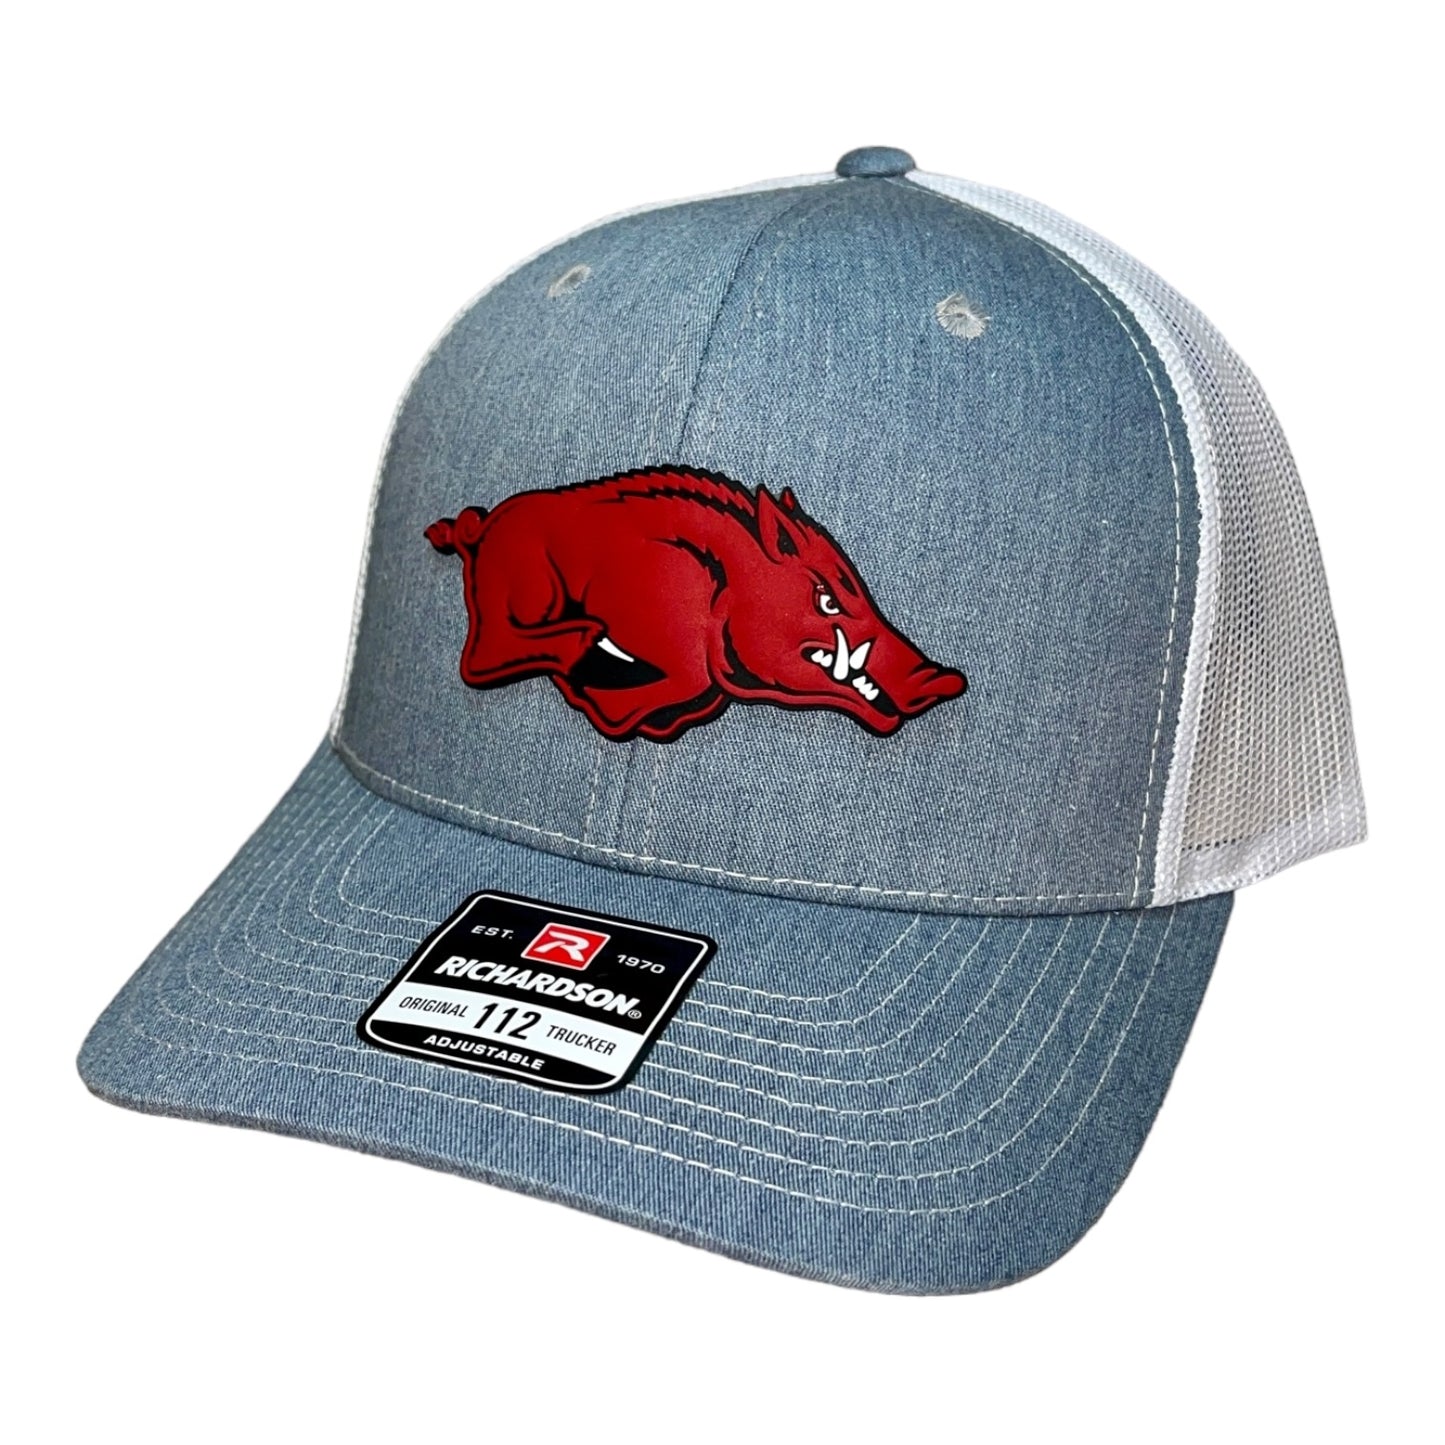 Arkansas Razorbacks 3D Snapback Trucker Hat- Heather Grey/ Light Grey